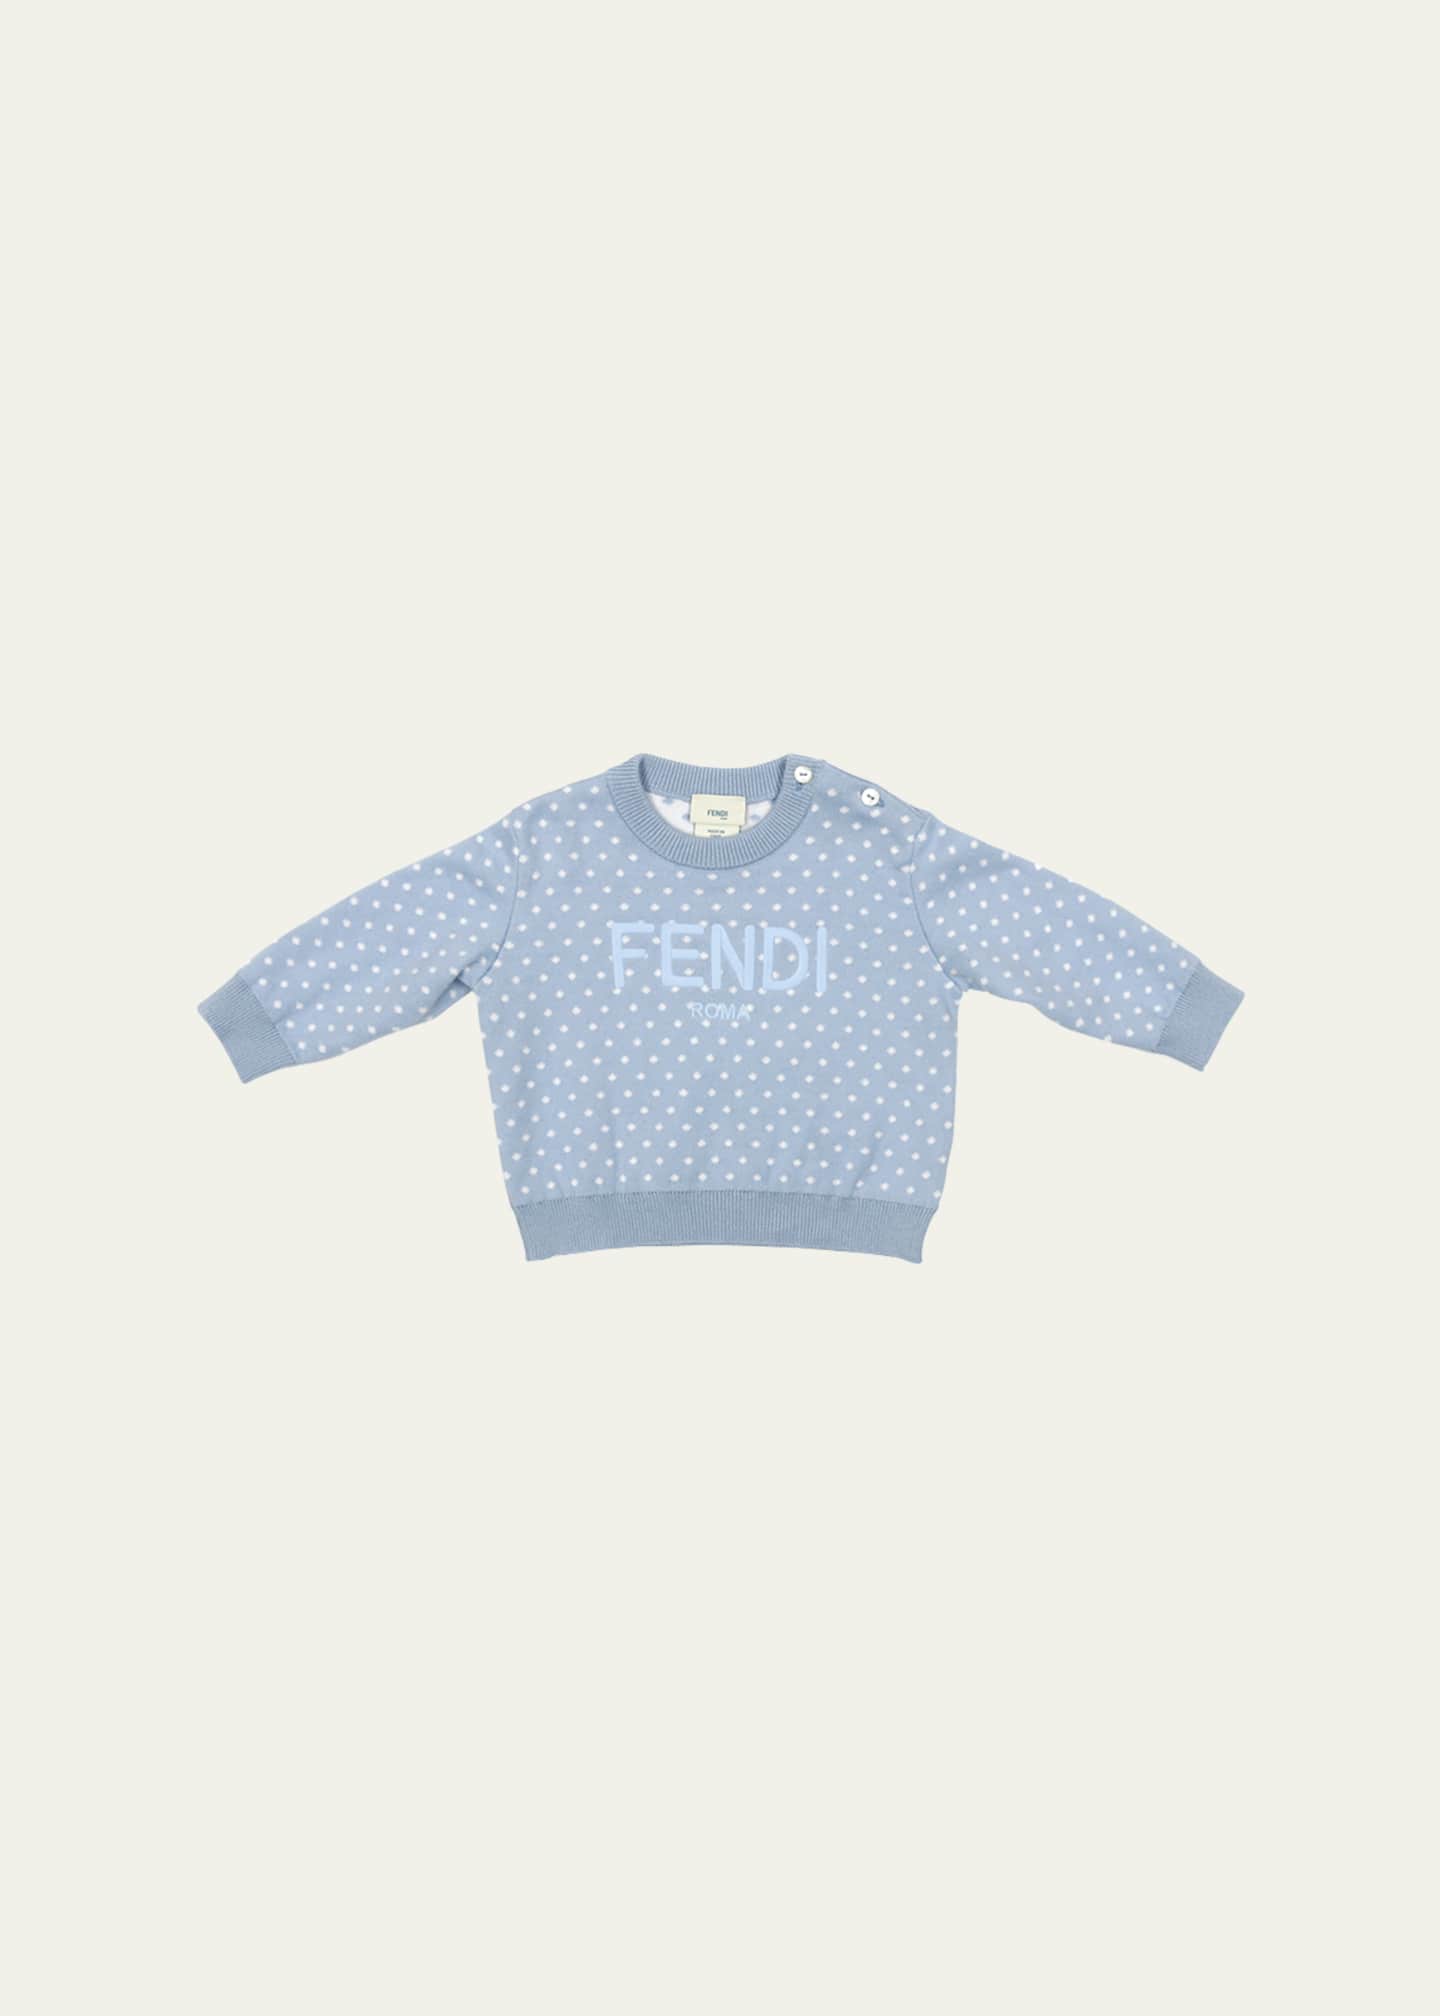 Fendi Kid's Dot Allover Knit Long-Sleeve Top, Size 3M-24M